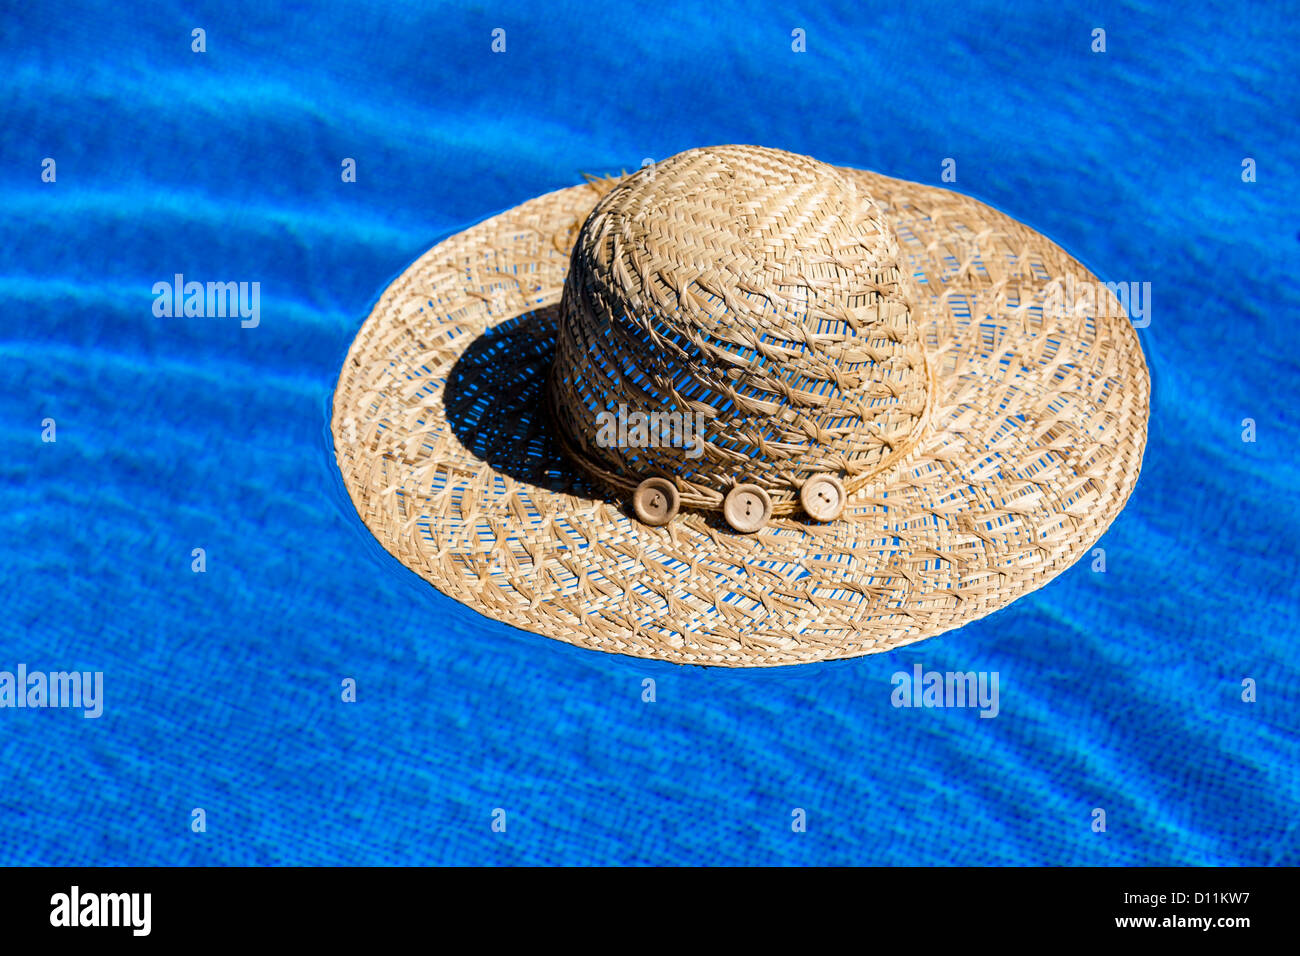 https://c8.alamy.com/comp/D11KW7/austria-linz-sun-hat-floating-in-swimming-pool-D11KW7.jpg